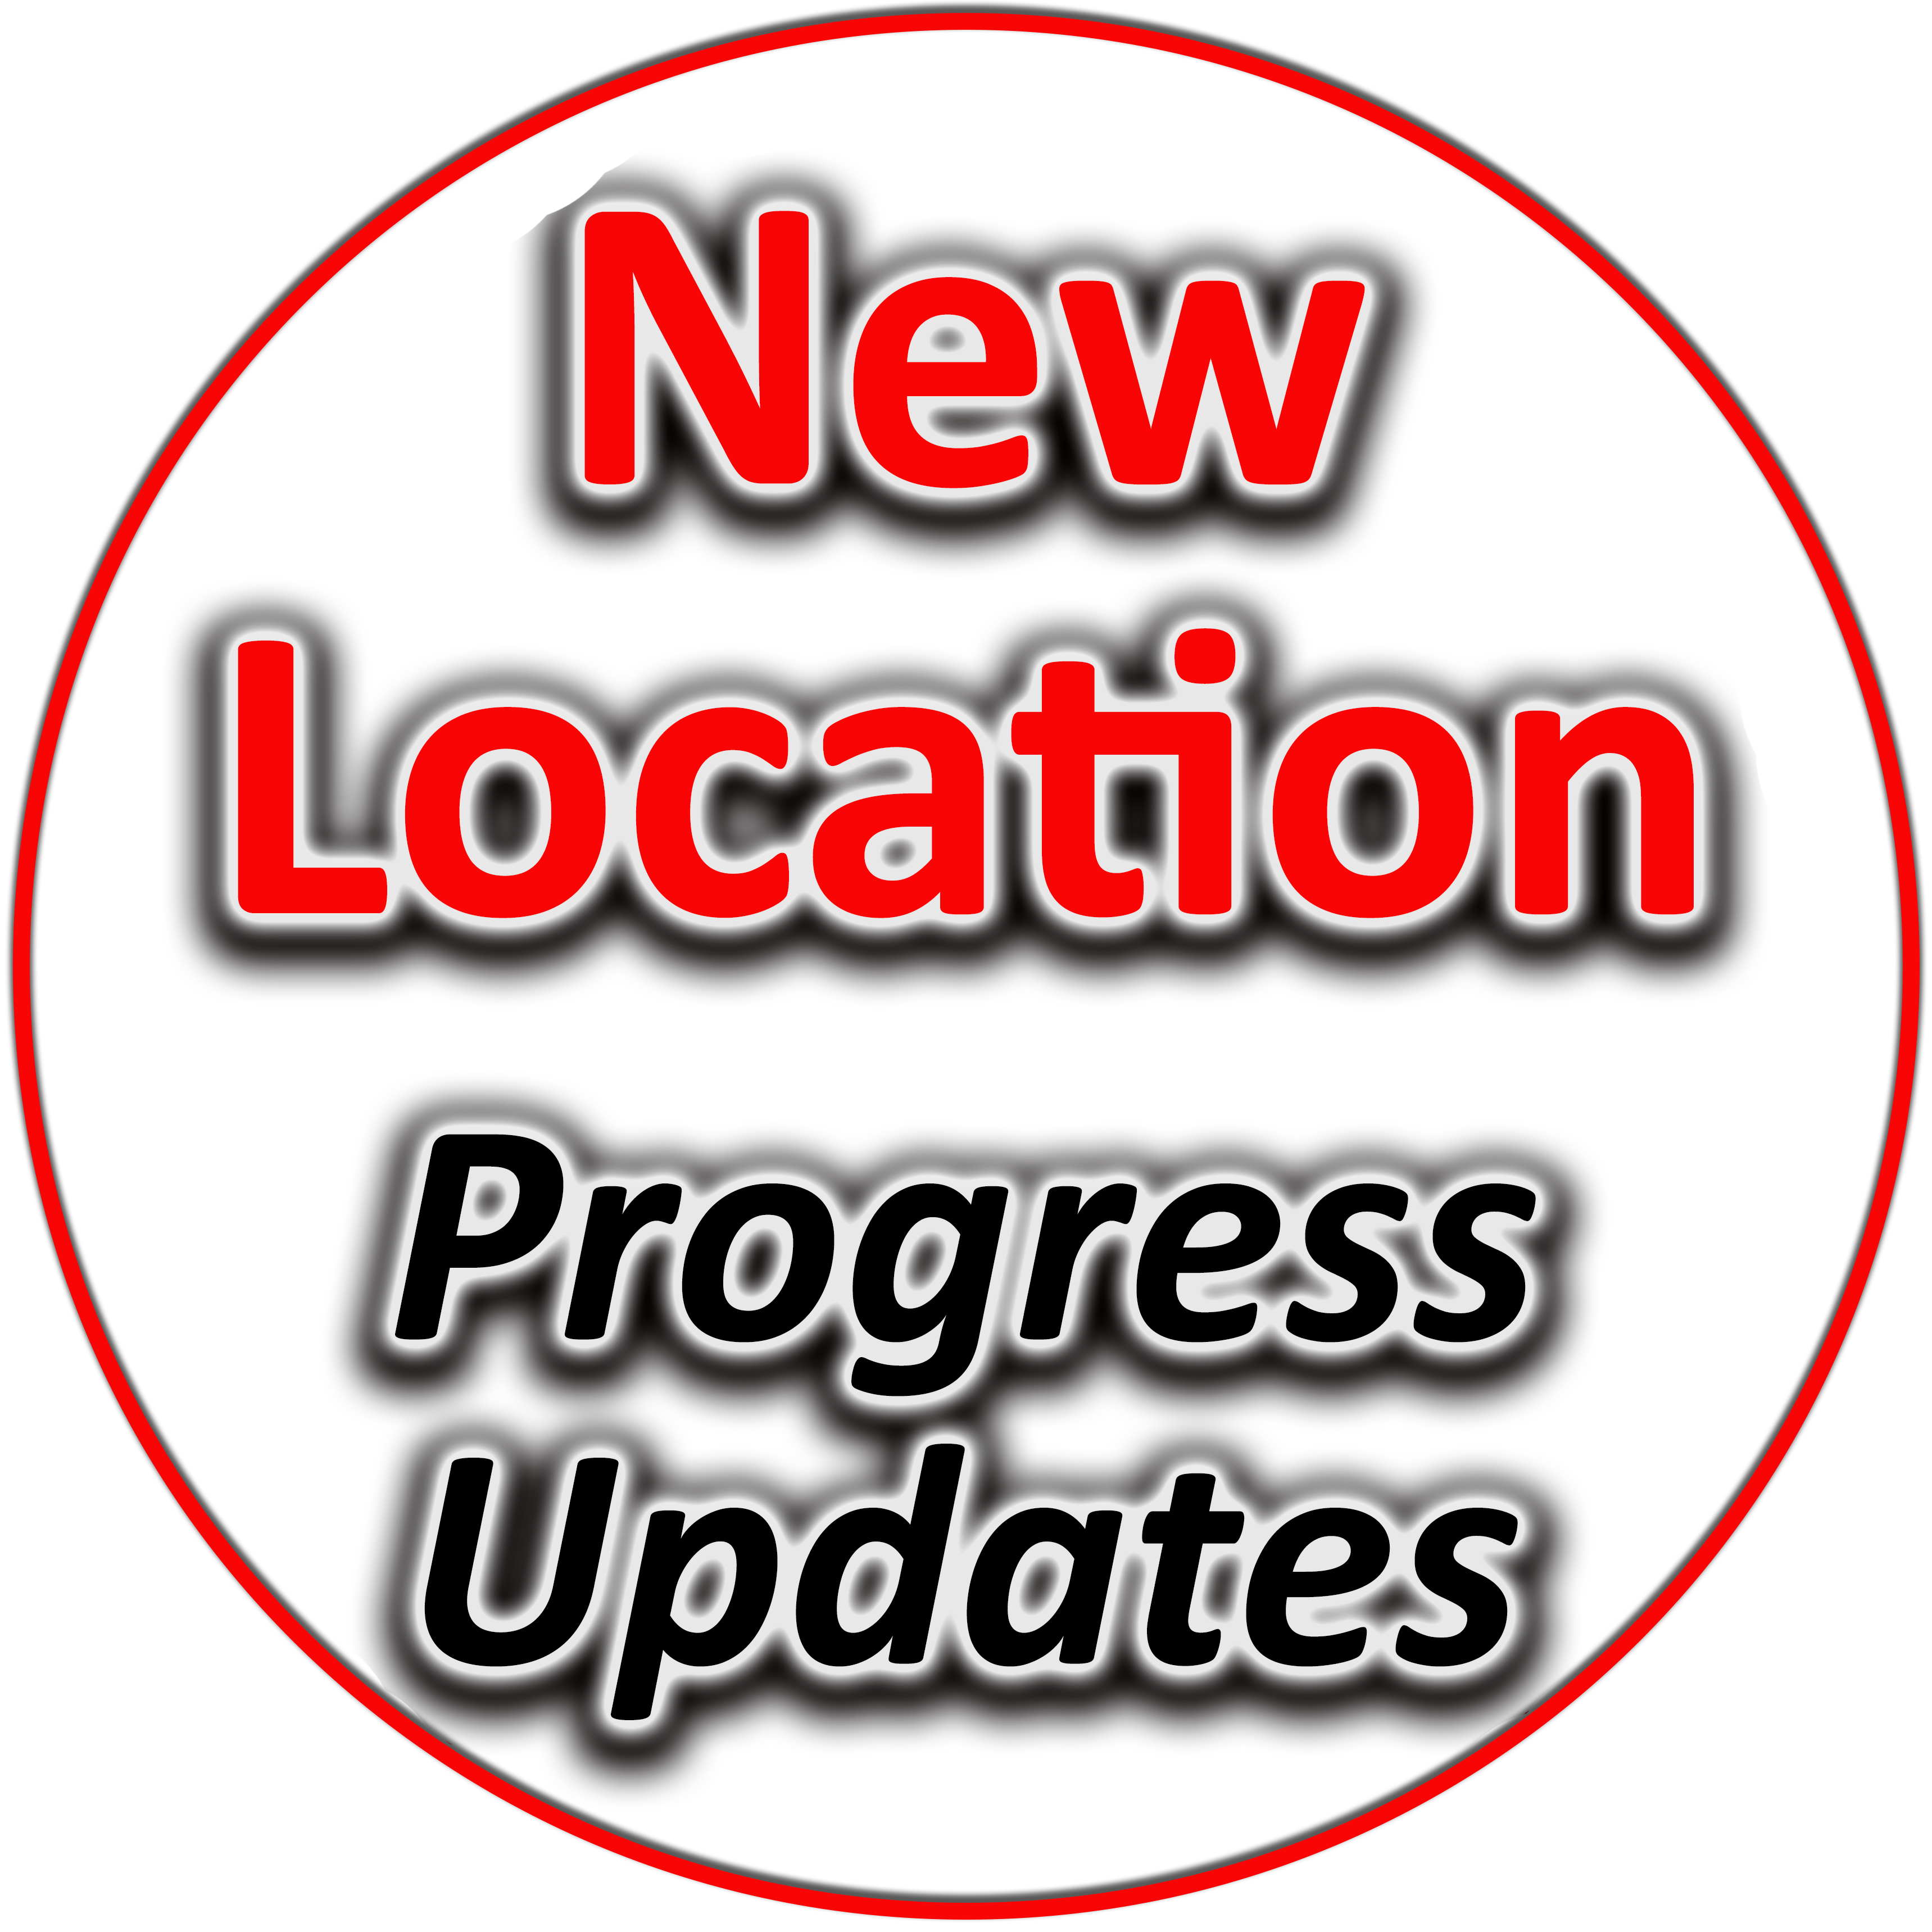 New Location Progress Updates